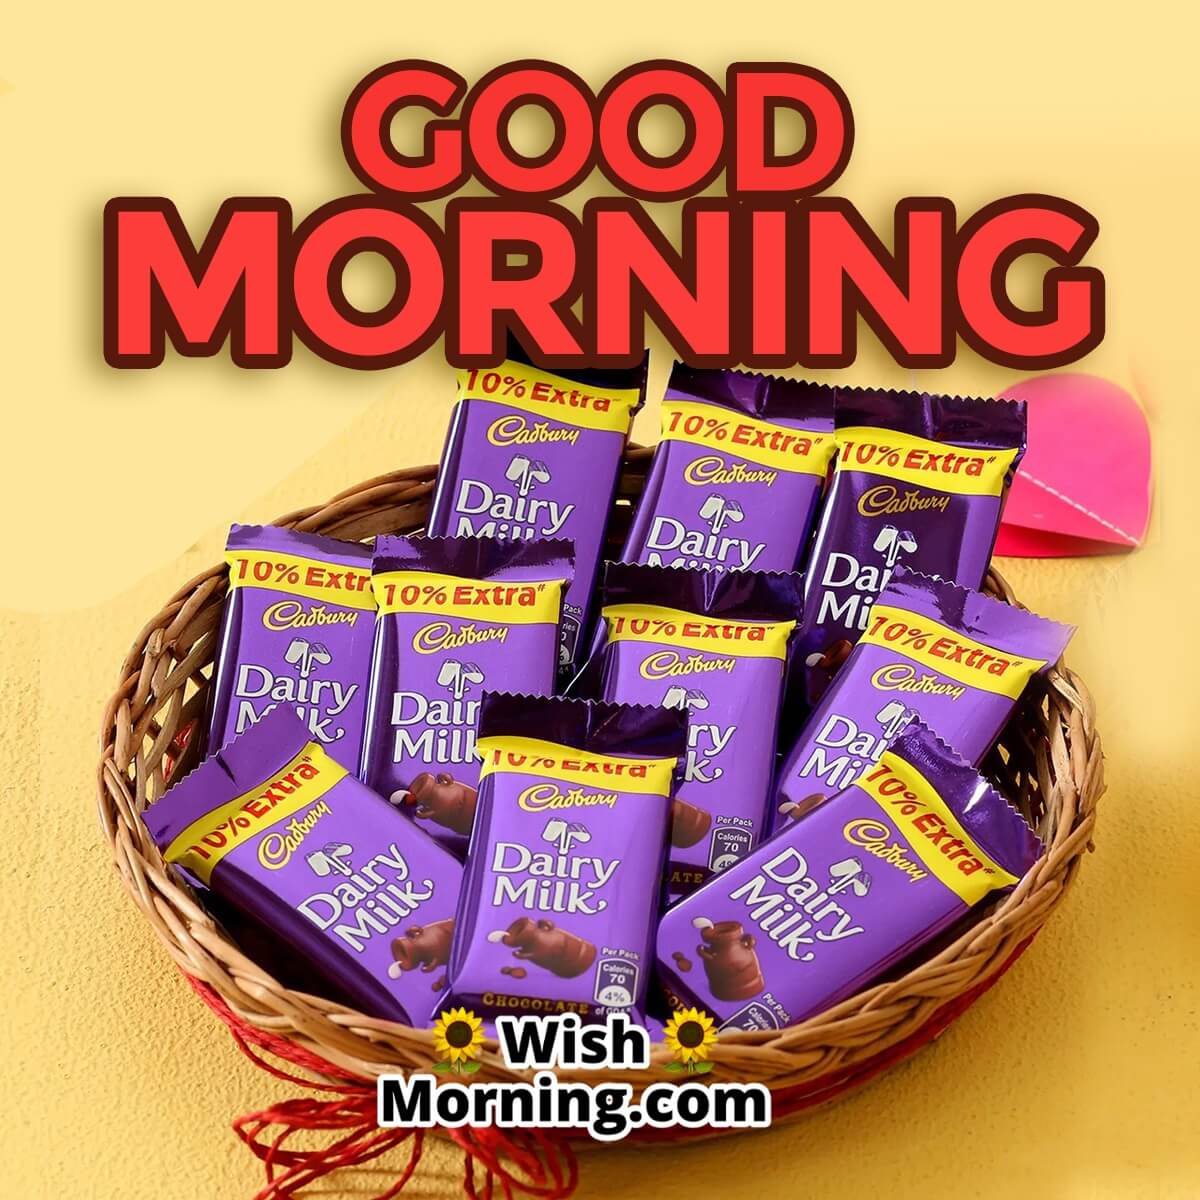 Sweet Good Morning Chocolate Images - Wish Morning